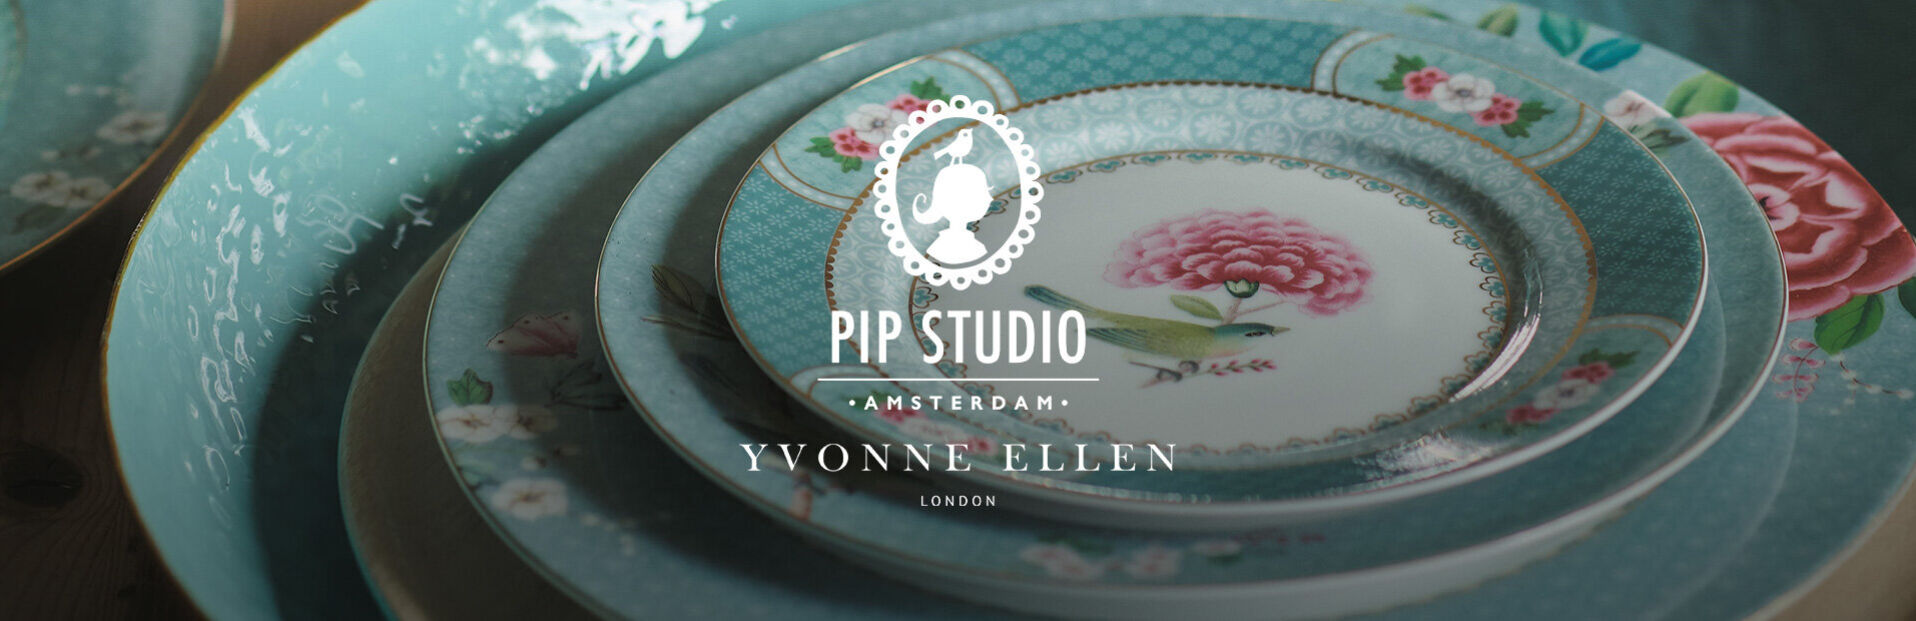 Vente Privée Pip studio - Ellen London